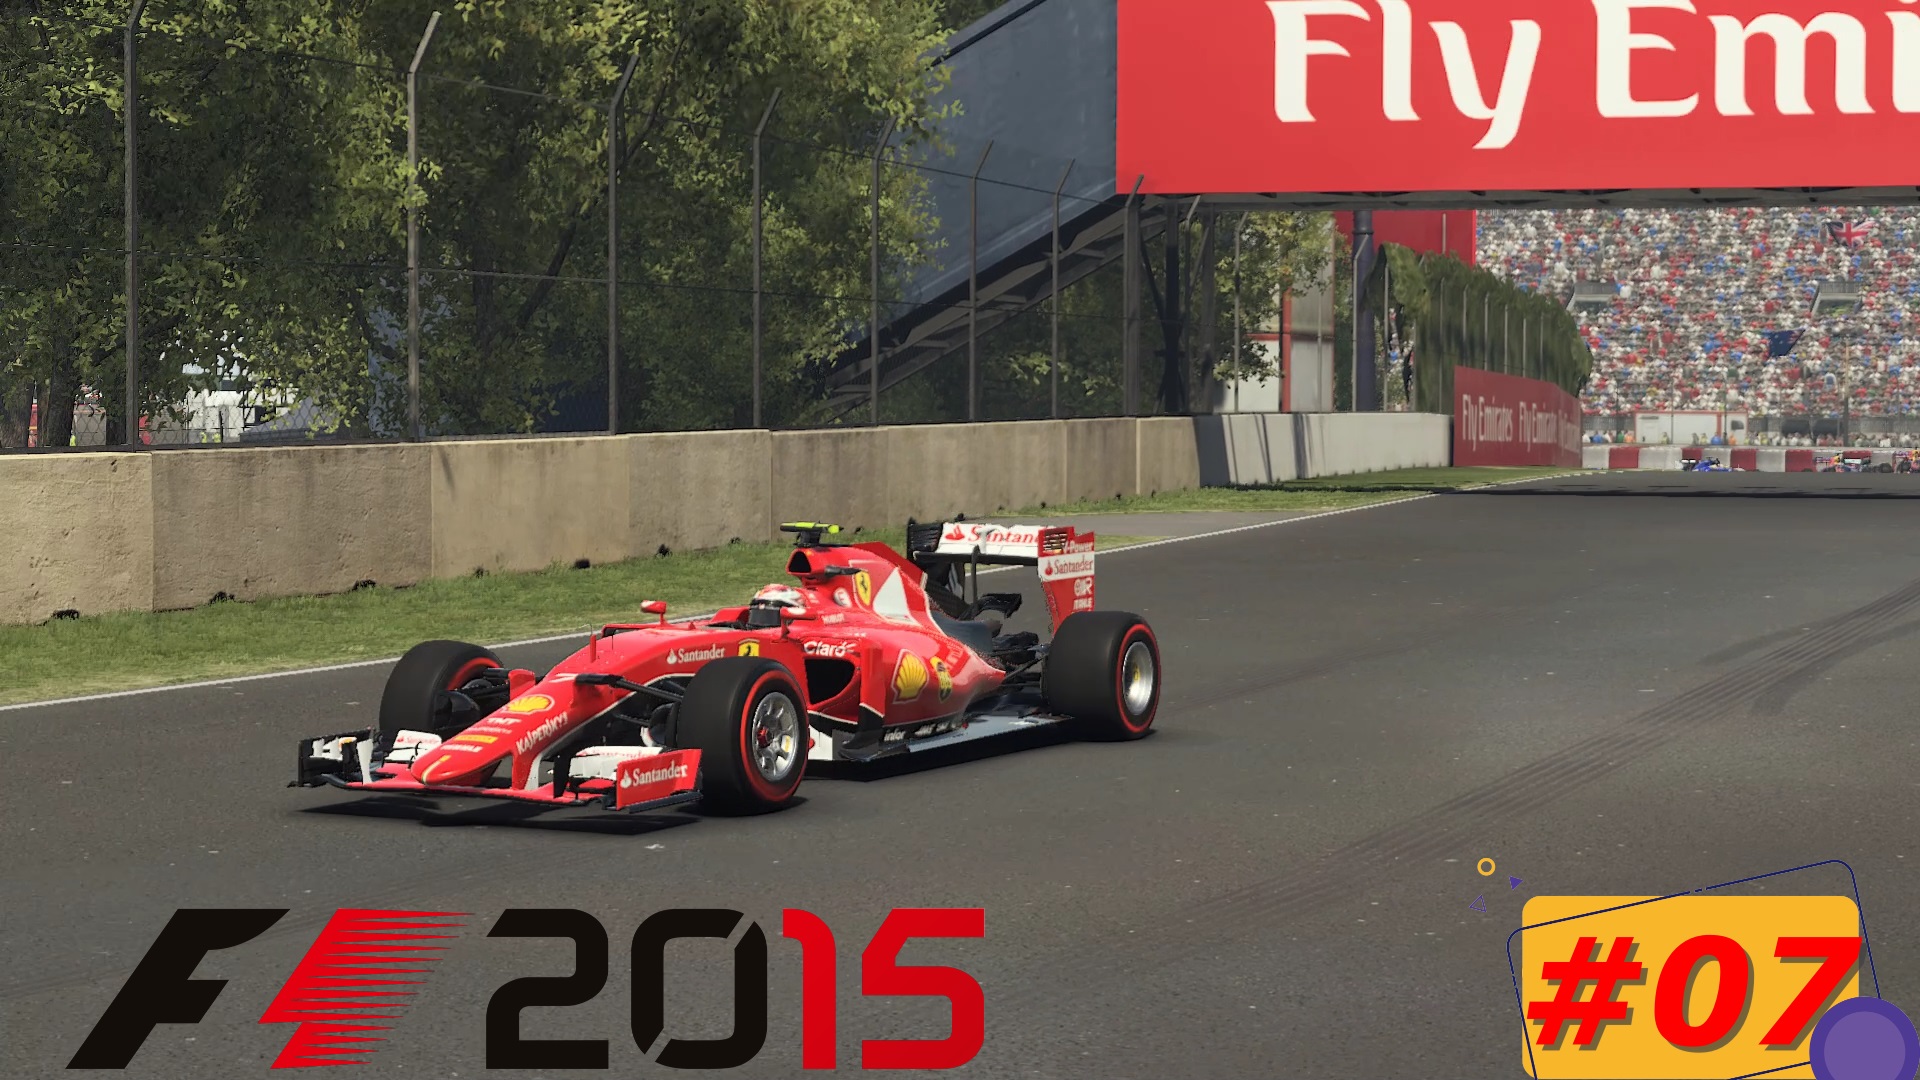 Scuderia Ferrari - #07 Circuit Gilles Villeneuve | F1 2015 | Logitech G29